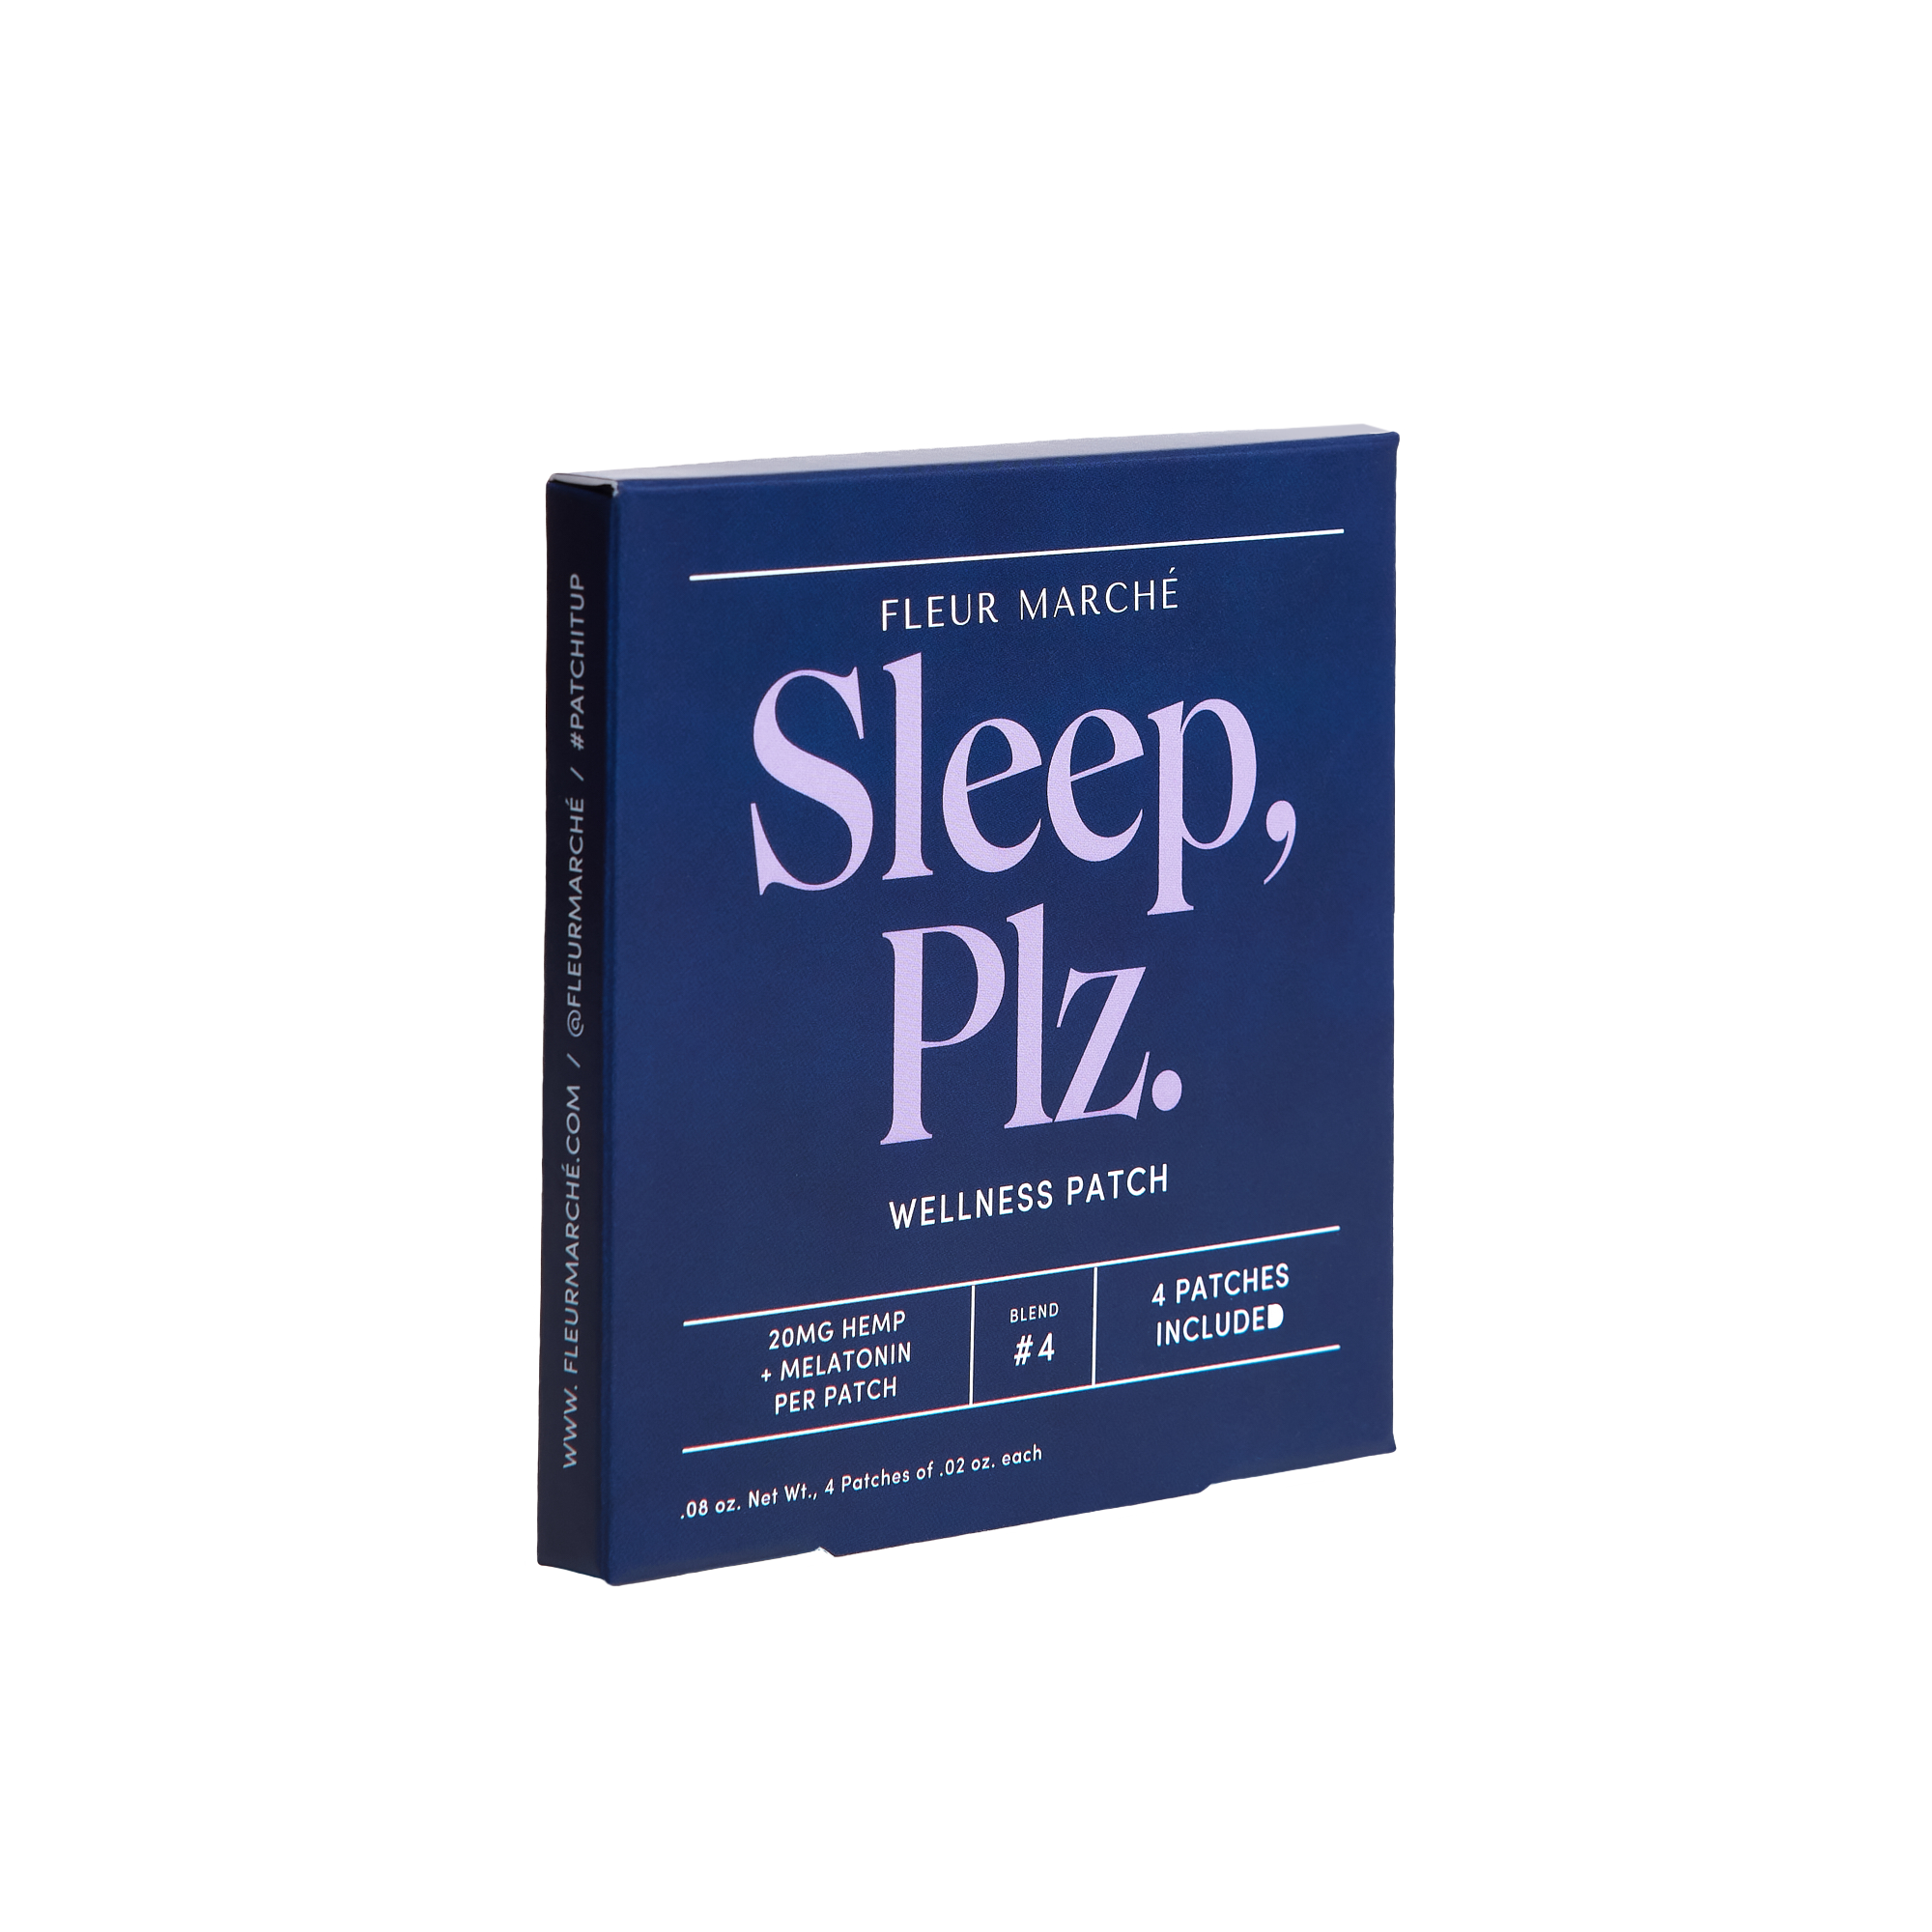 Wholesale Sleep, Plz. Multipack